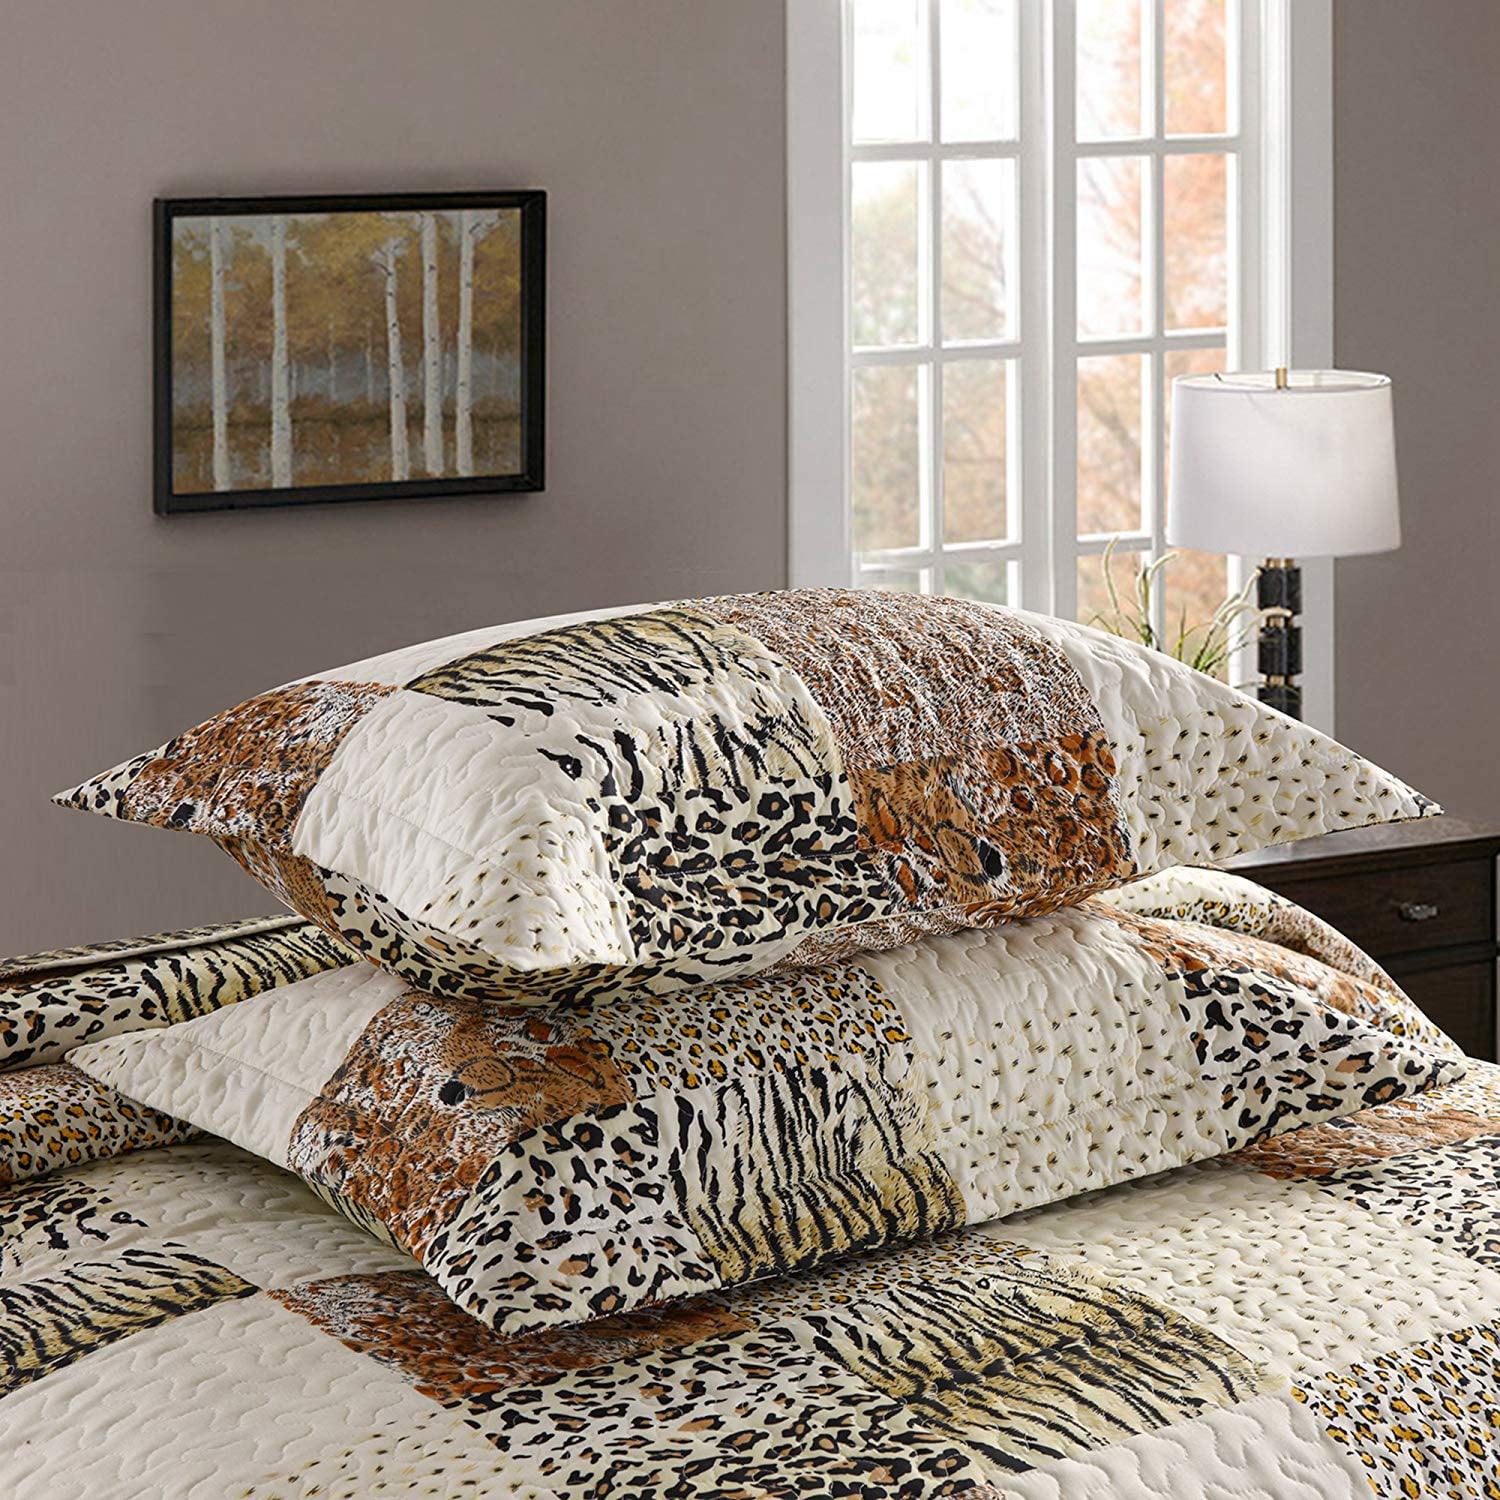 MarCielo 3 Piece Quilted Bedspread (Queen) Print Cheetah Leopard Bedding Coverlet Animal Blanket Bedspread Set Quilt Ensemble Quilt Print Throw